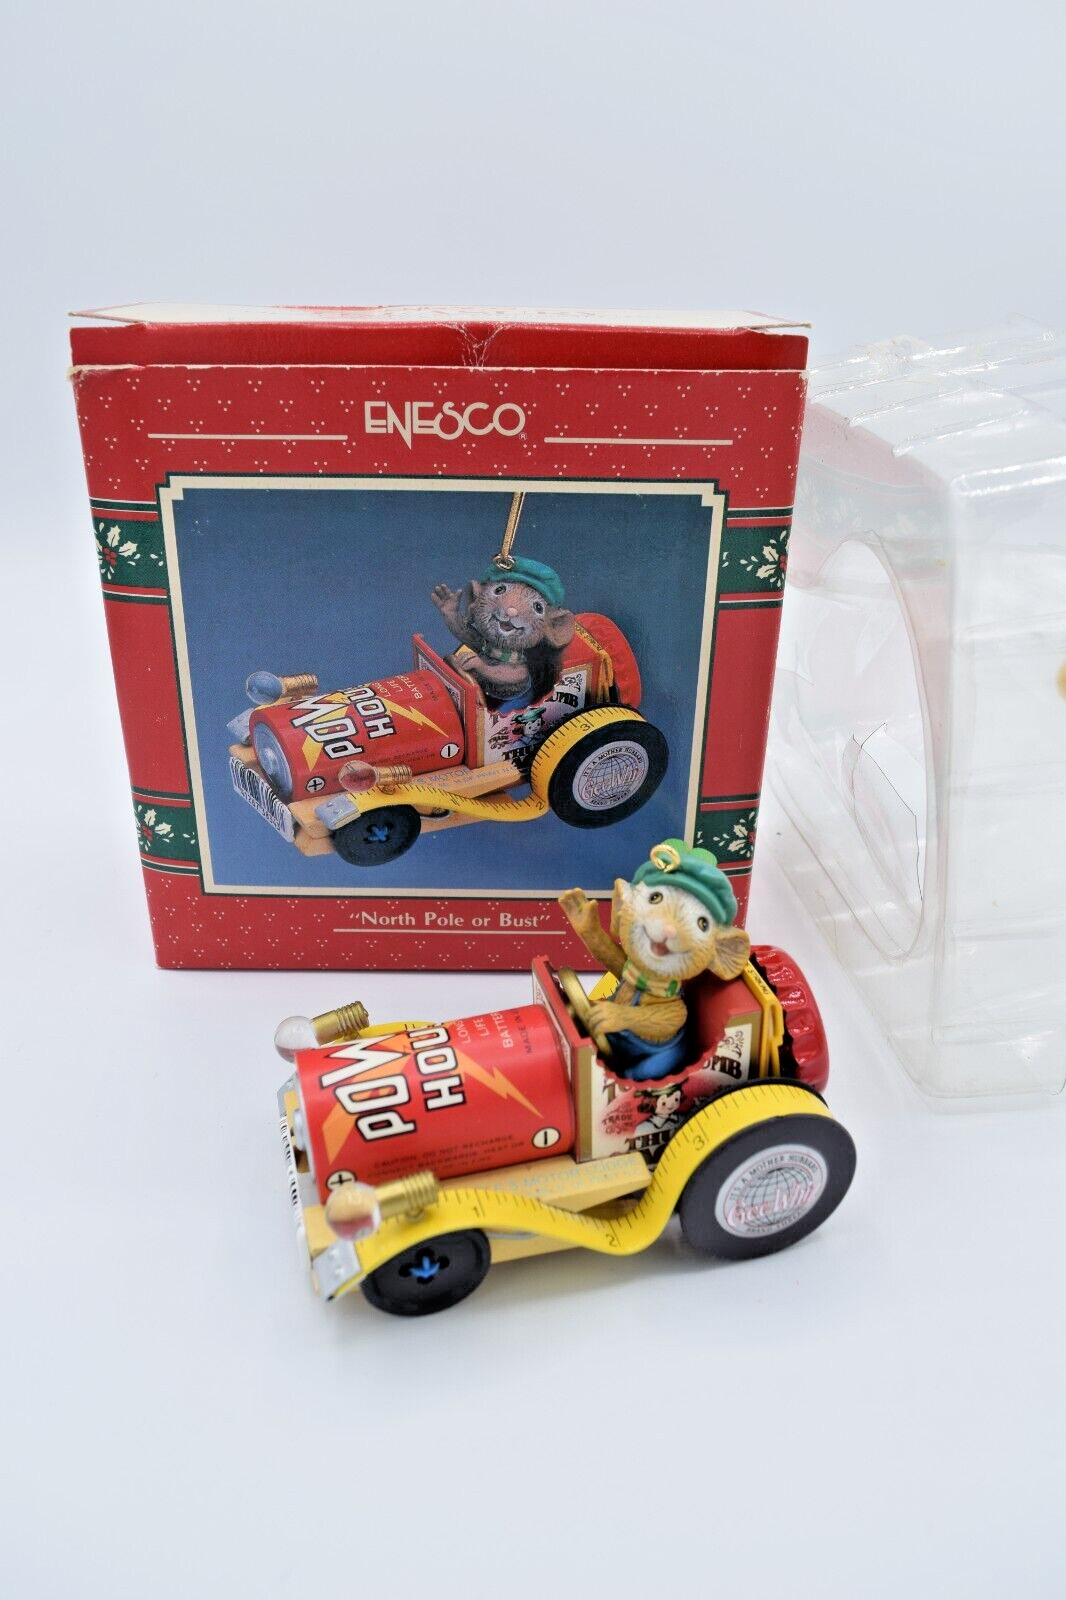 ENESCO NORTH POLE OR BUST 1990 Treasury of Christmas Ornament Mouse Race Car T7